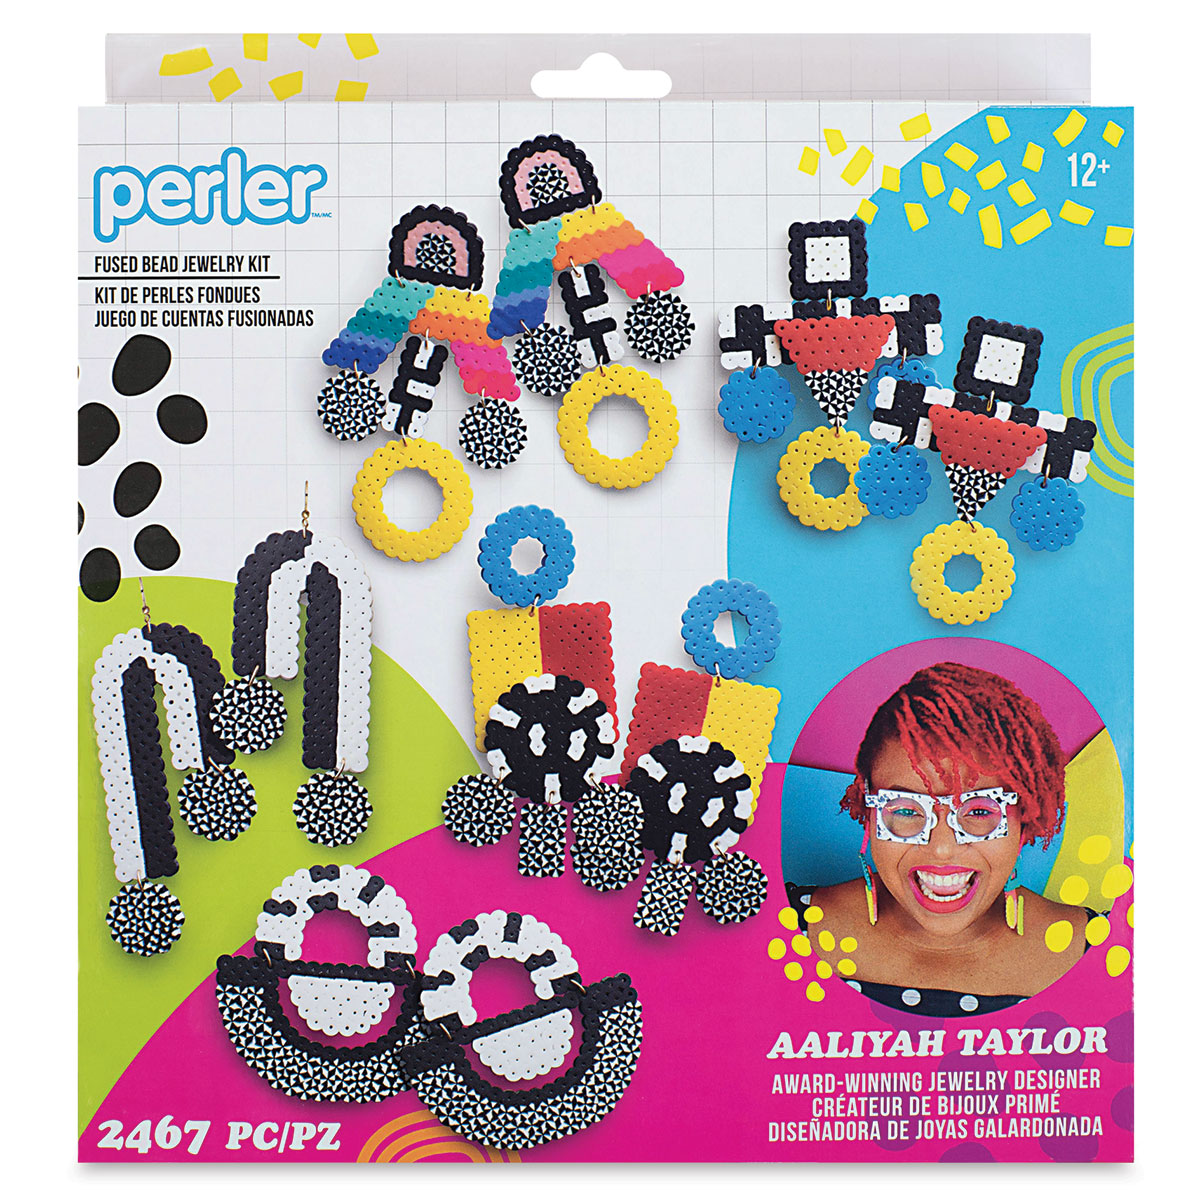 Perler Deluxe Fused Bead Kit - Harry Potter - 9336191